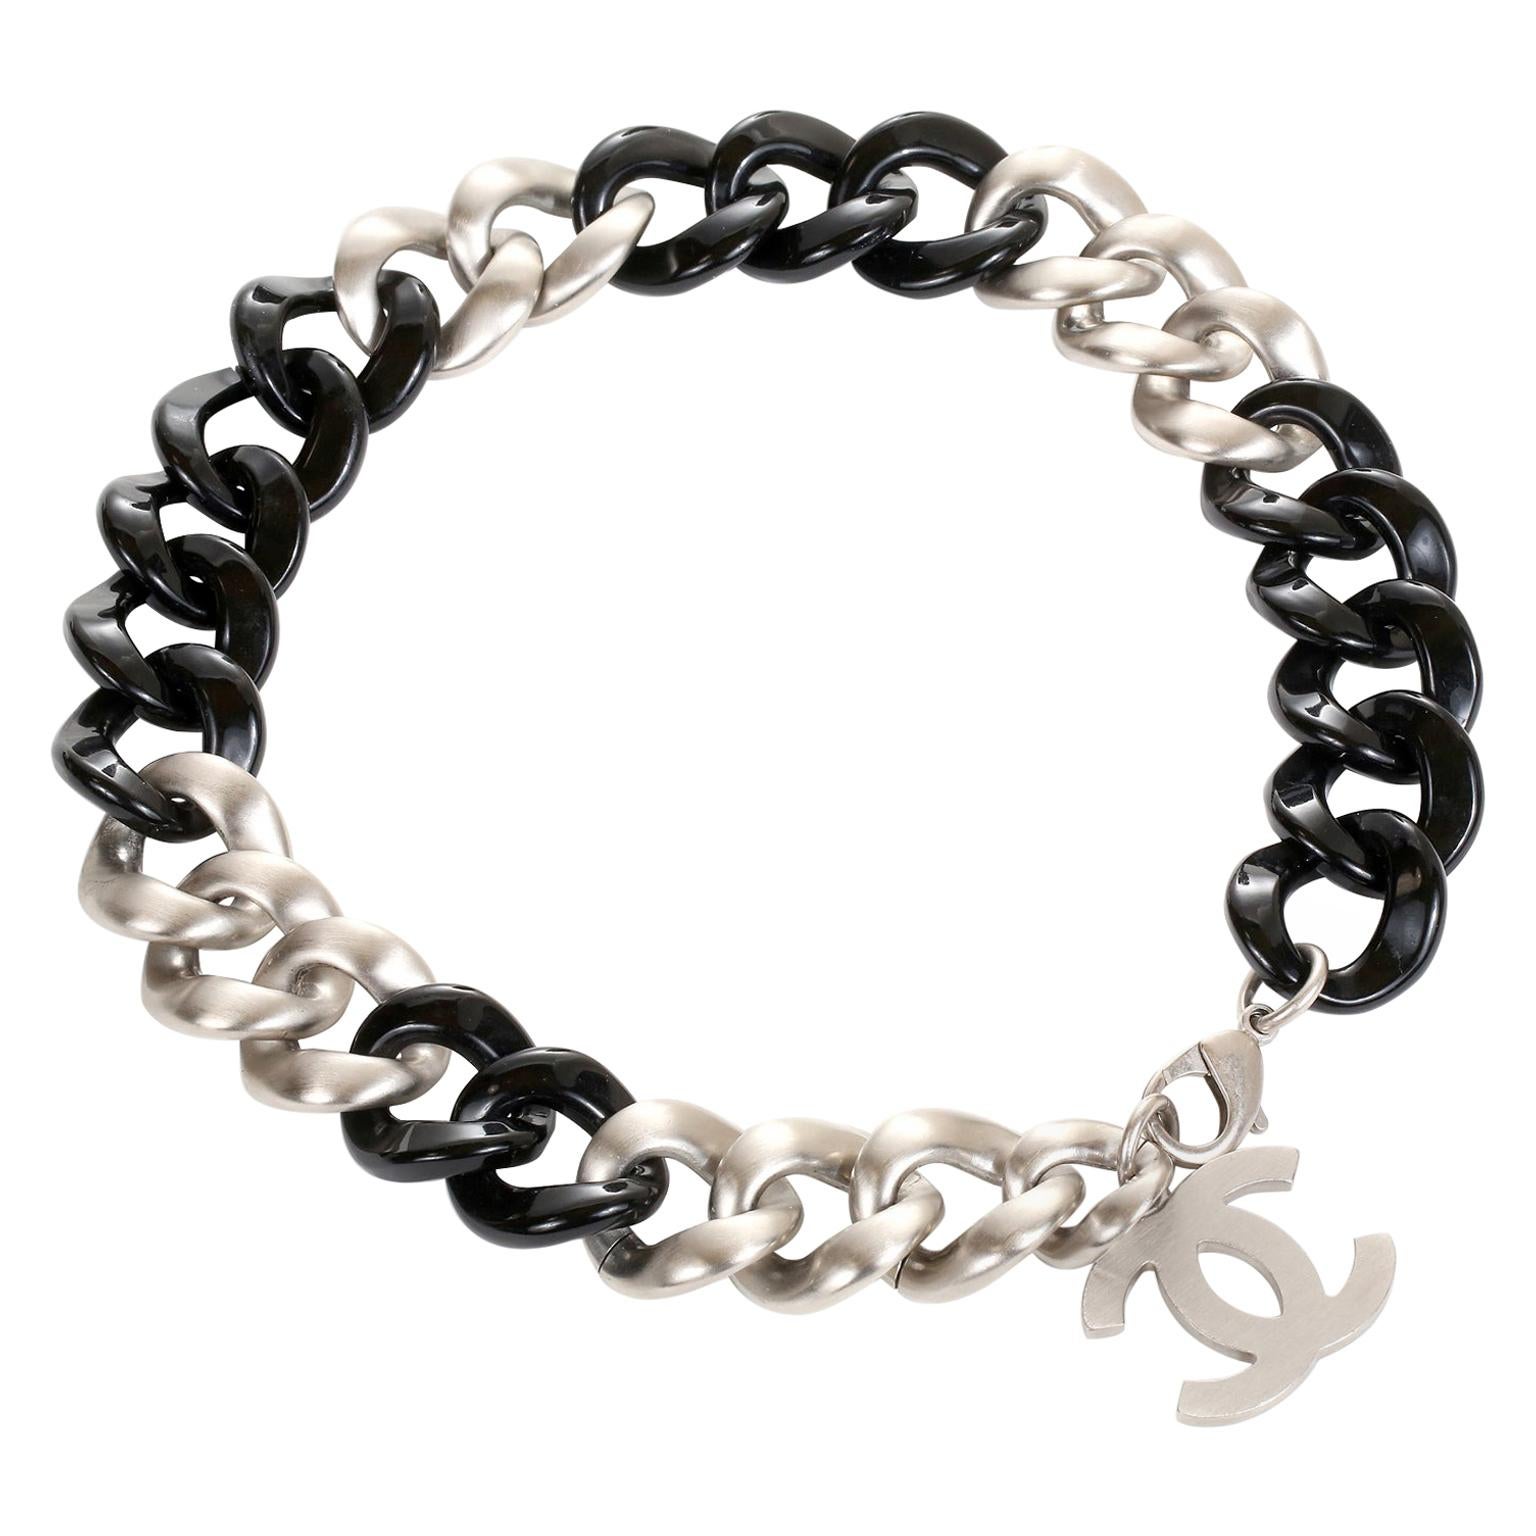 Chanel Silver and Black Resin Curb Chain CC Choker